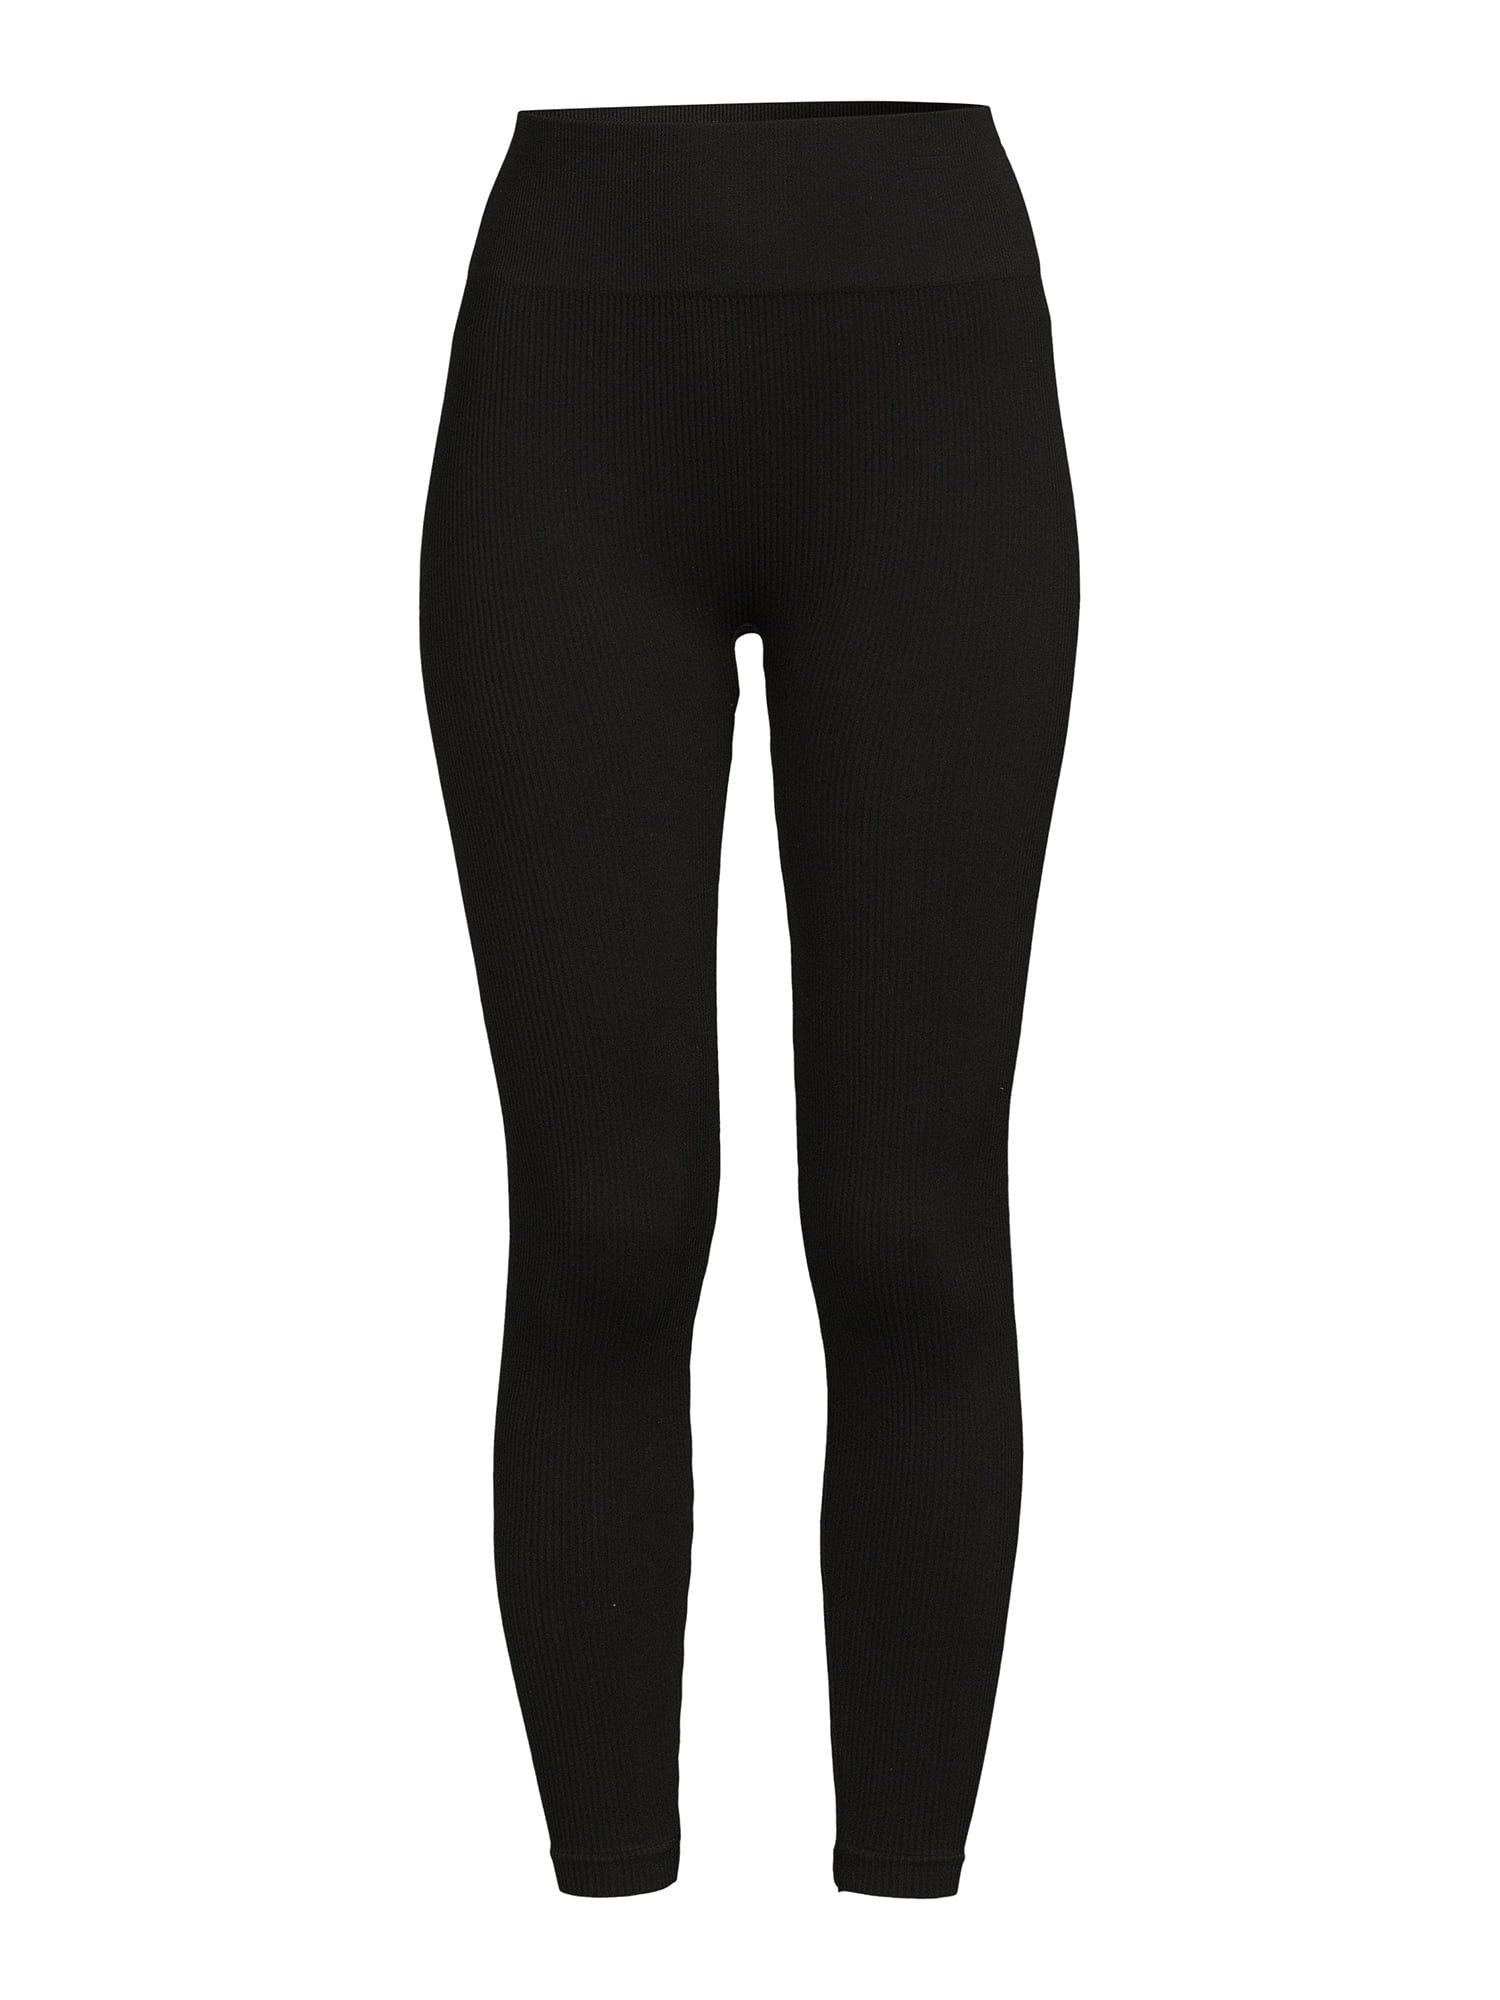 NWT No Boundaries Black leggings sz XXXL (21) plus size. Cut out